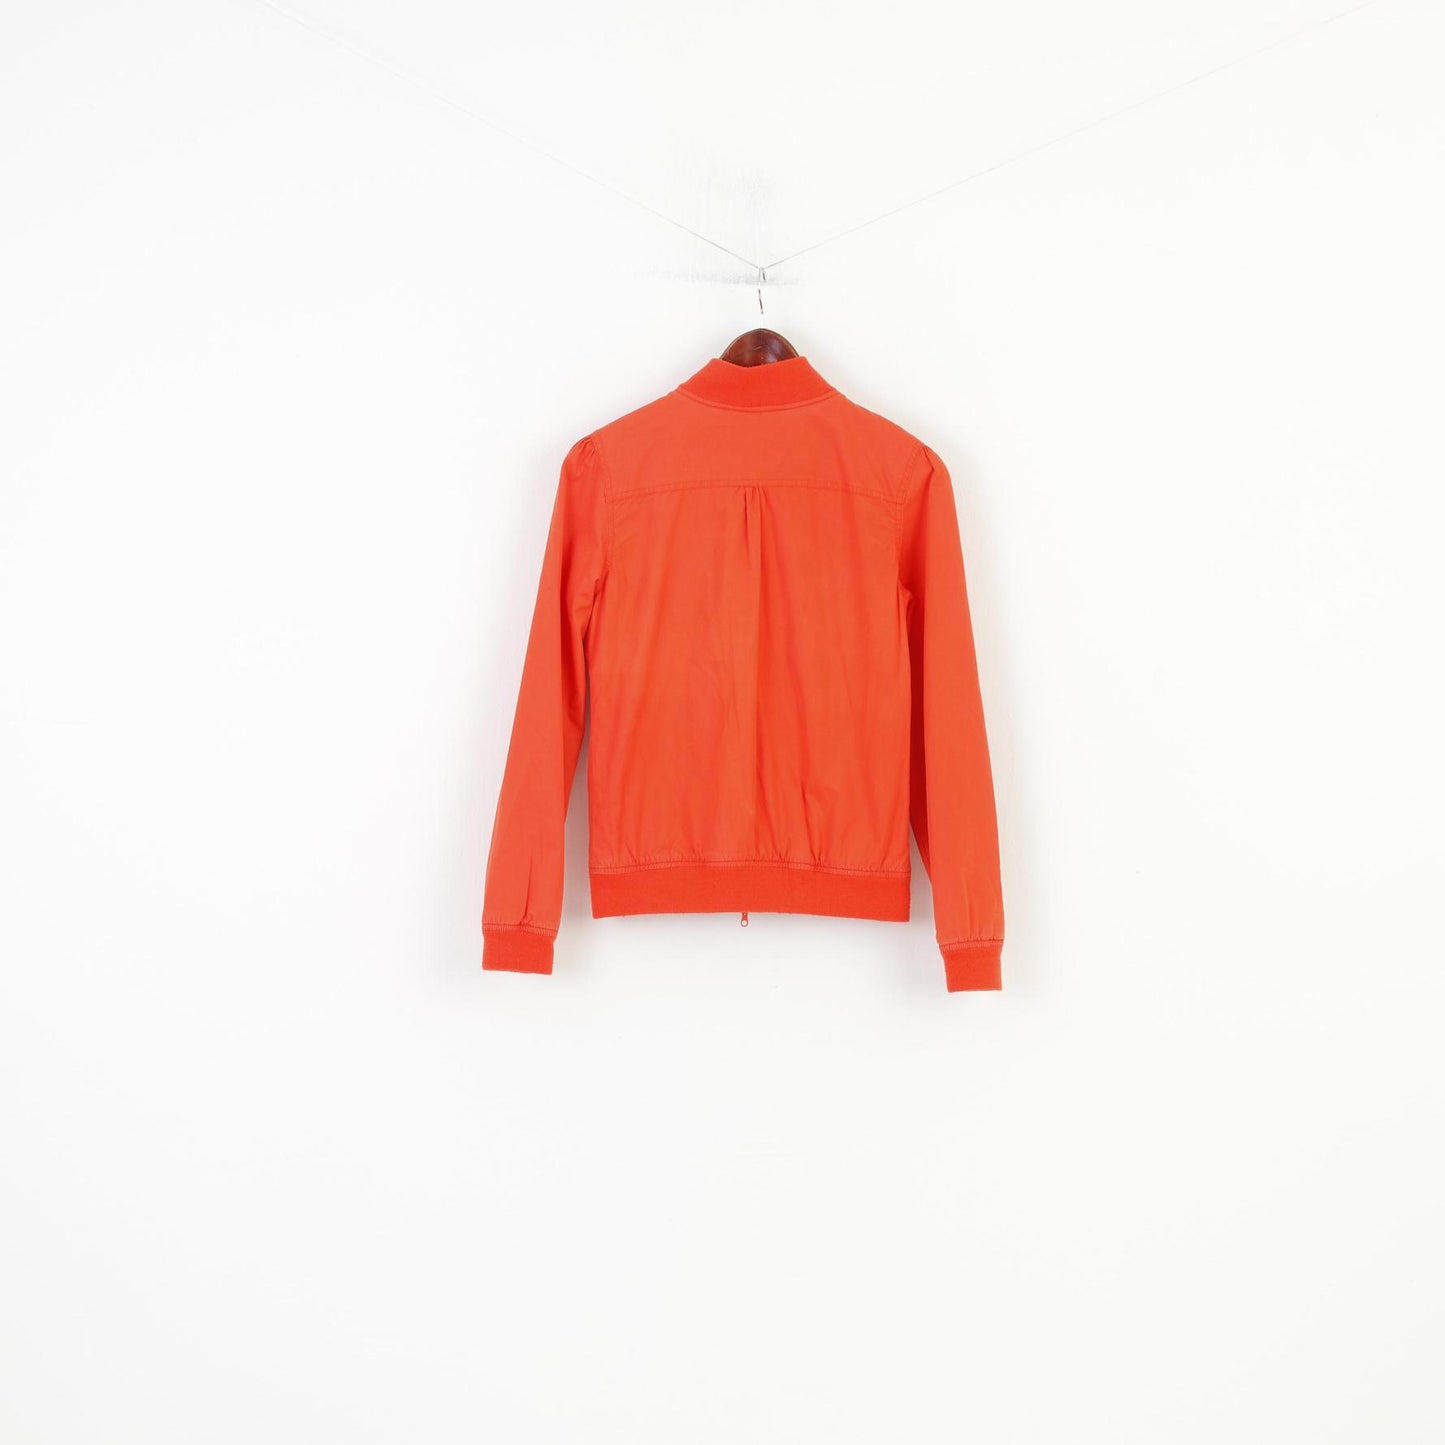 Troll Women M Jacket Orange Cotton Full Zipper Collar Vintage Top